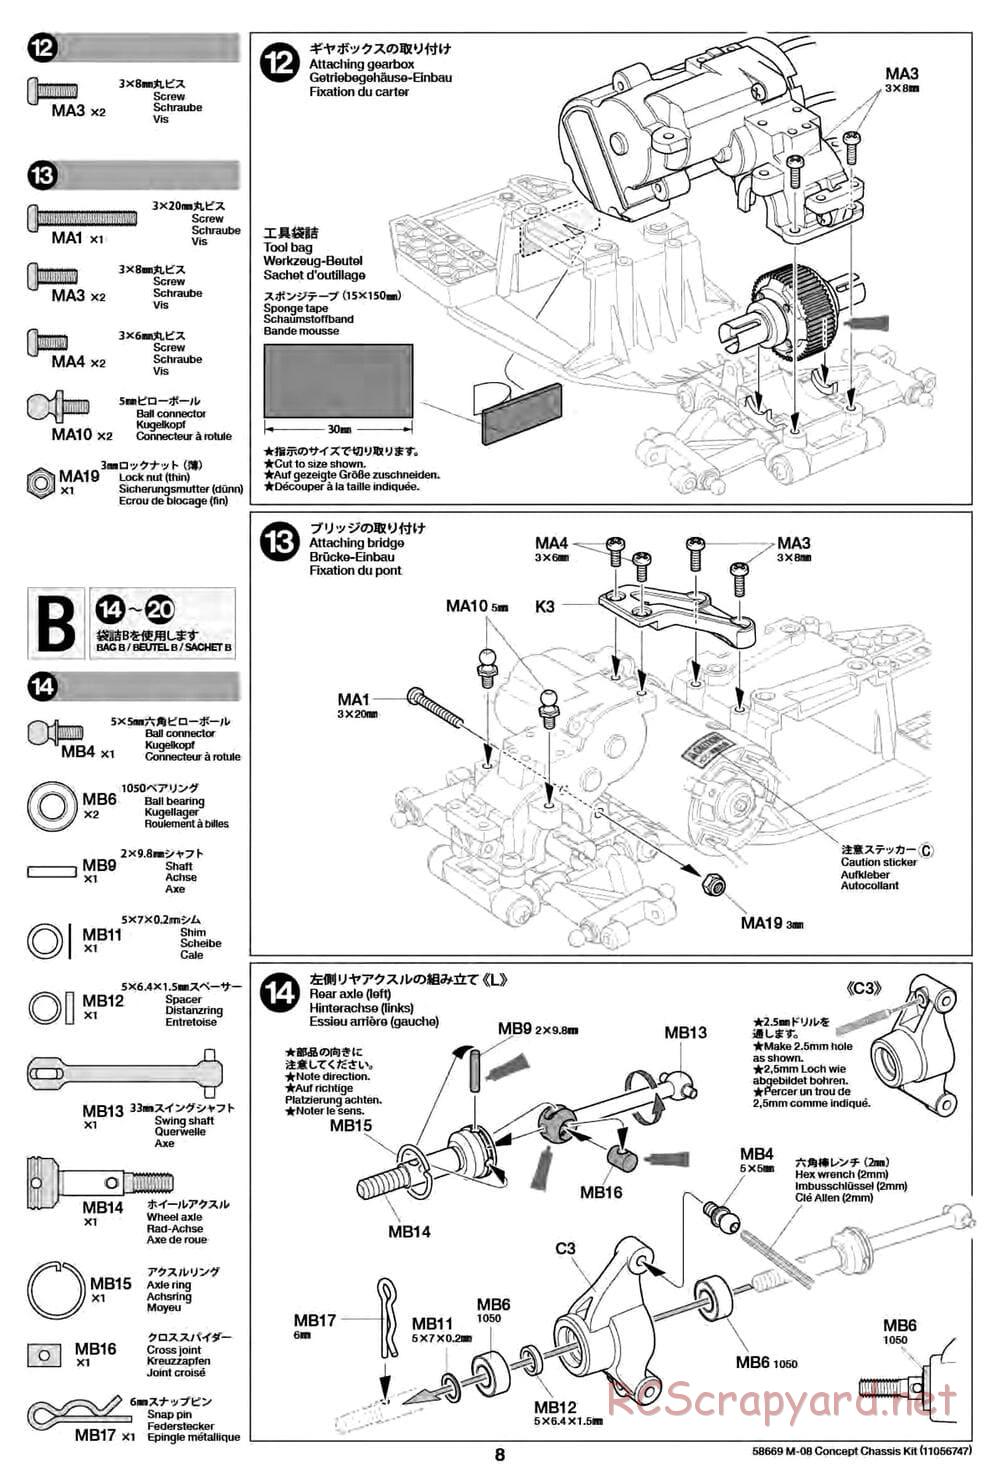 Tamiya - M-08 Concept Chassis - Manual - Page 8